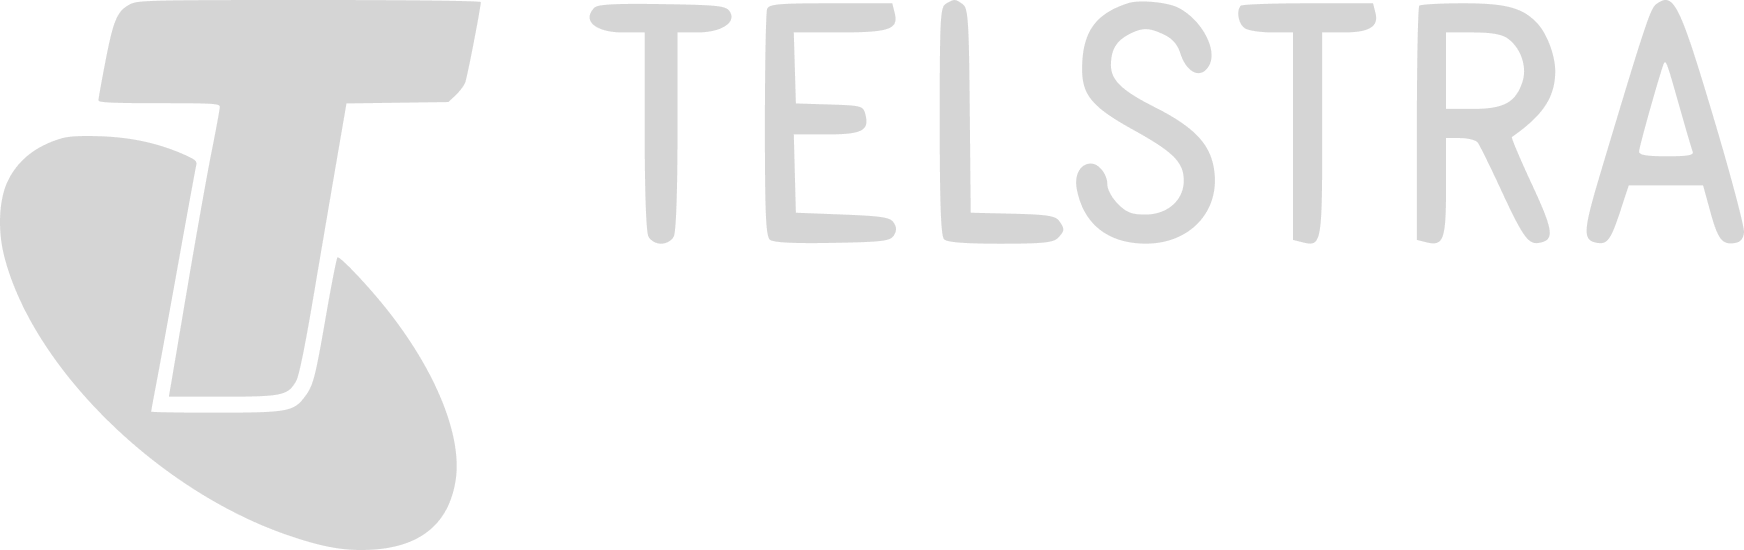 Telstra logo in greyscale